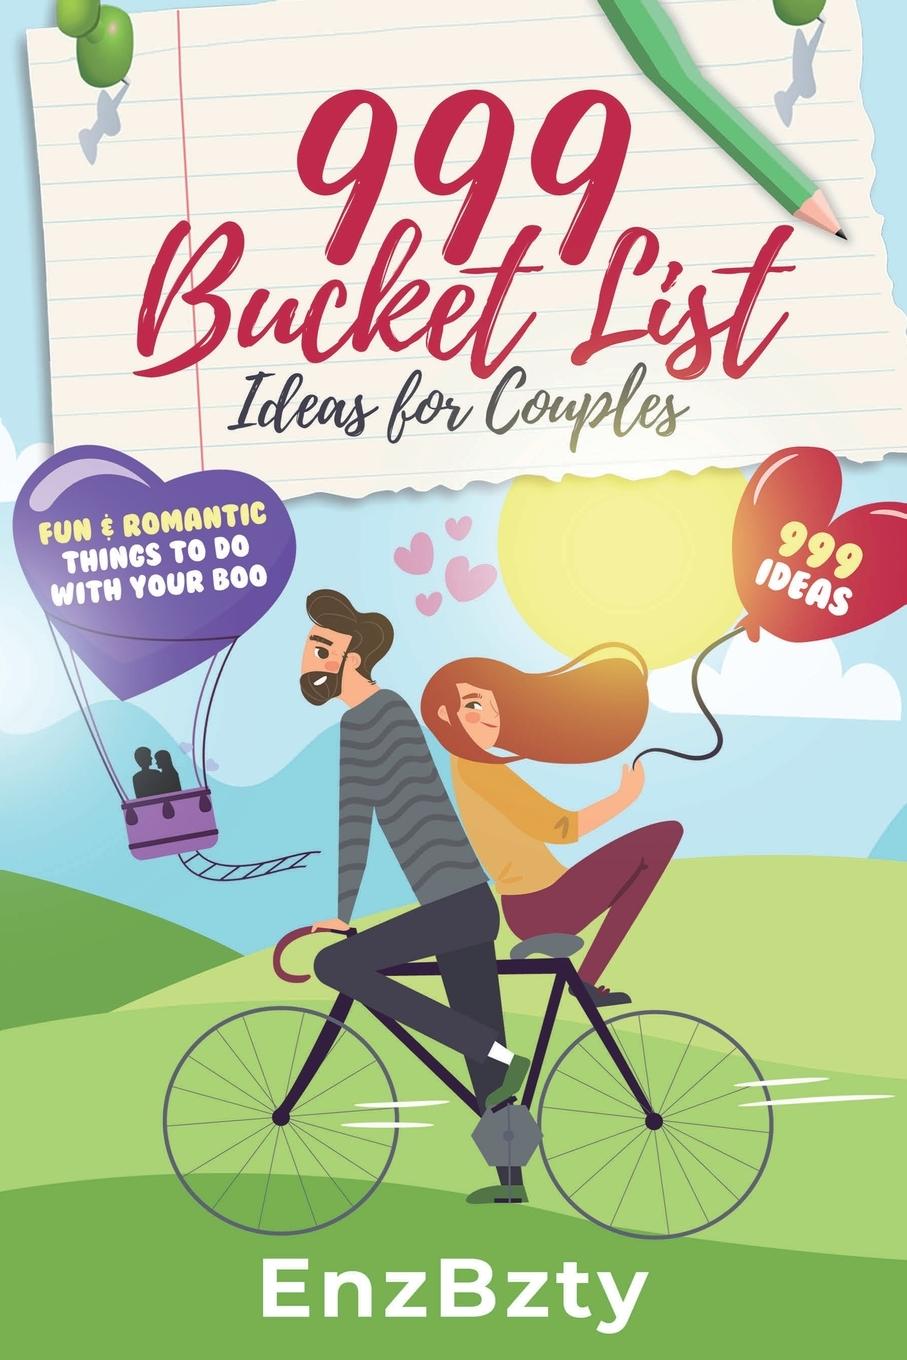 Knjiga 999 Bucket List Ideas for Couples 